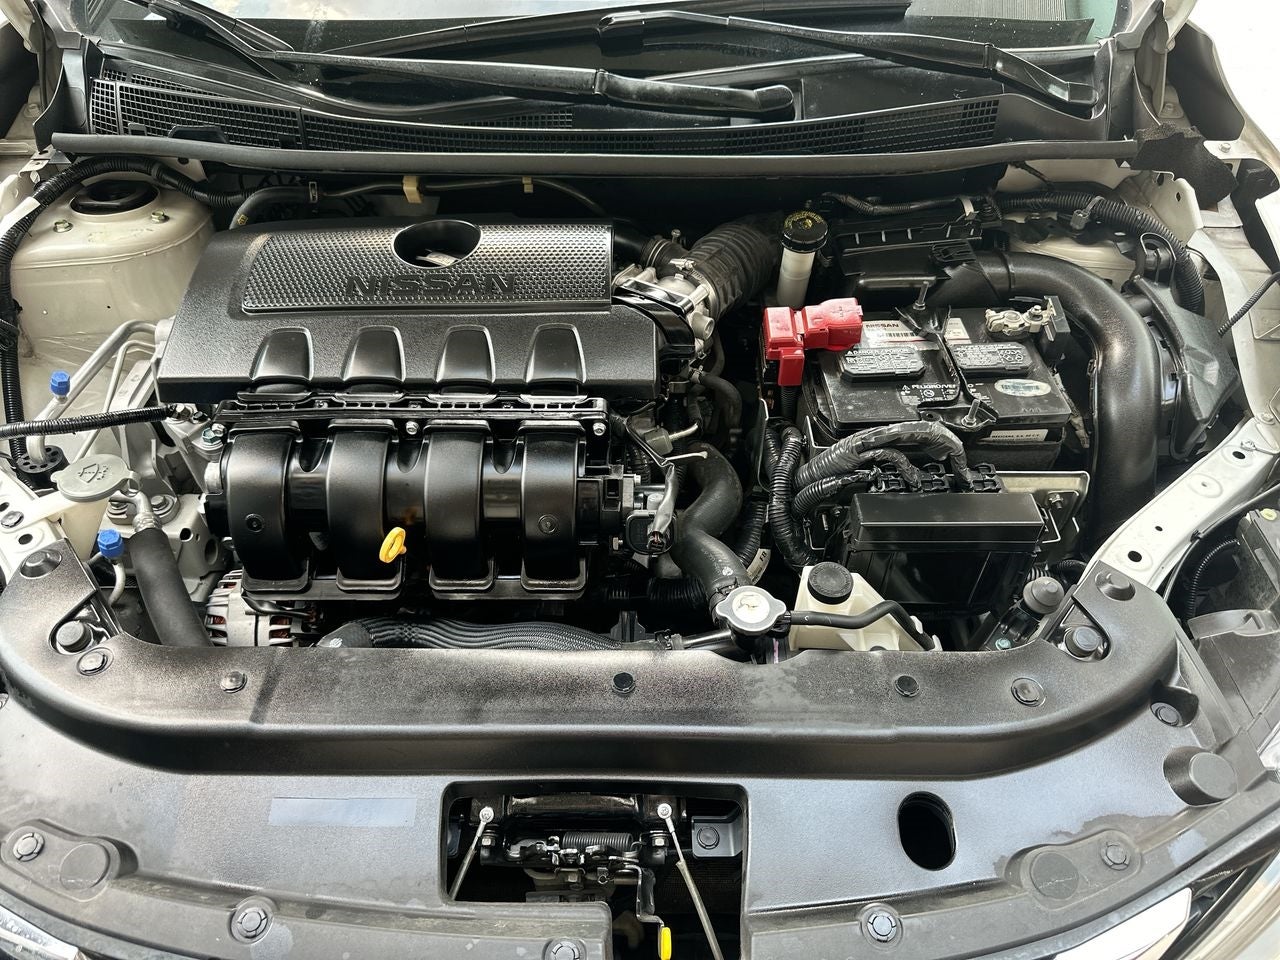 2019 Nissan SENTRA 4 PTS EXCLUSIVE CVT AAC AUT GPS PIEL QC F LED RA-17